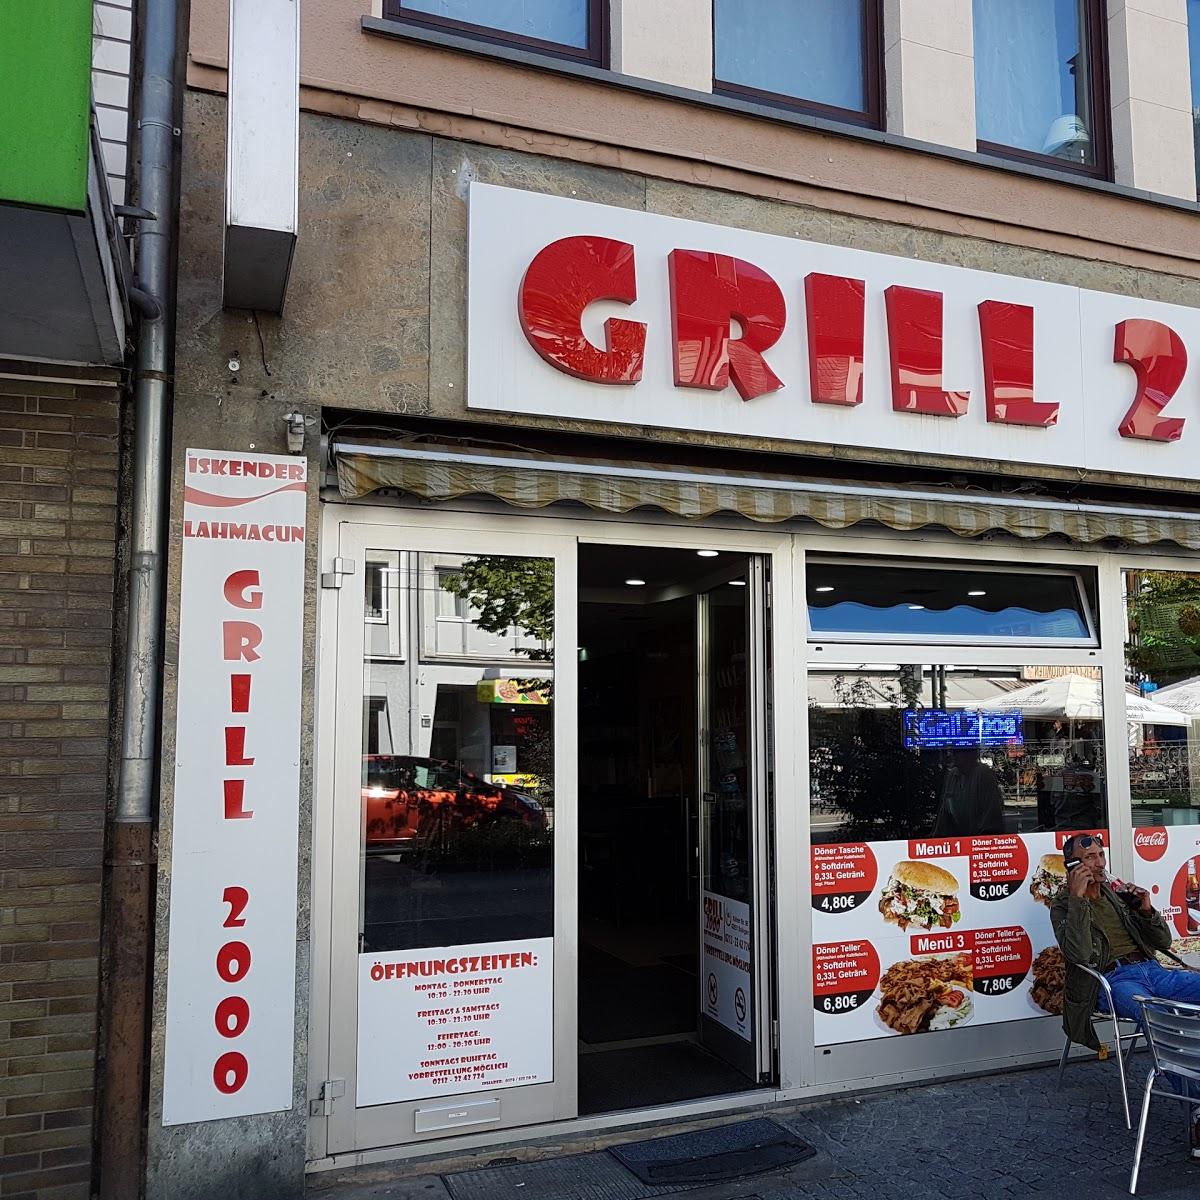 Restaurant "Grill 2000" in Solingen